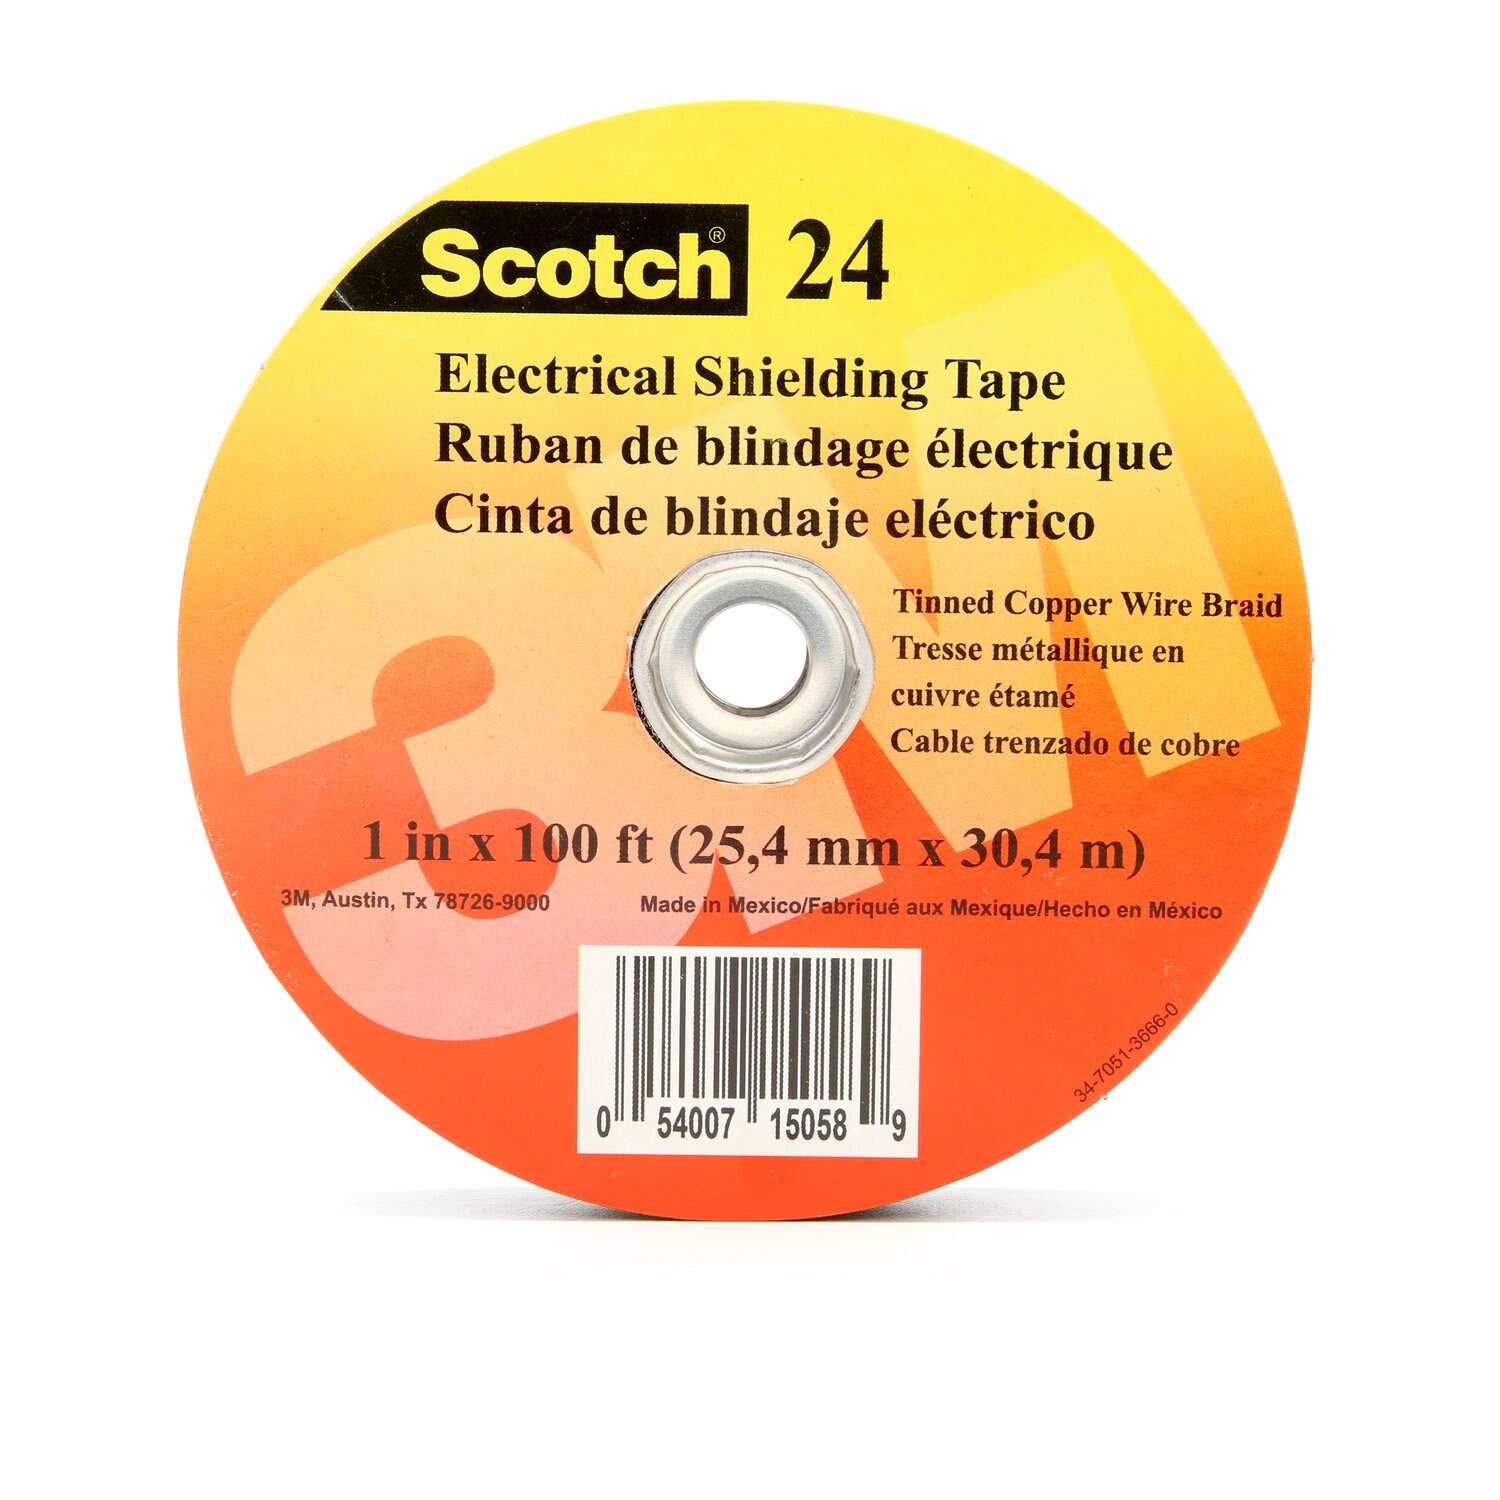 7100005805 - Scotch Electrical Shielding Tape 24, 1 in x 100 ft (25 mm x 30,5 m), 10
/Case